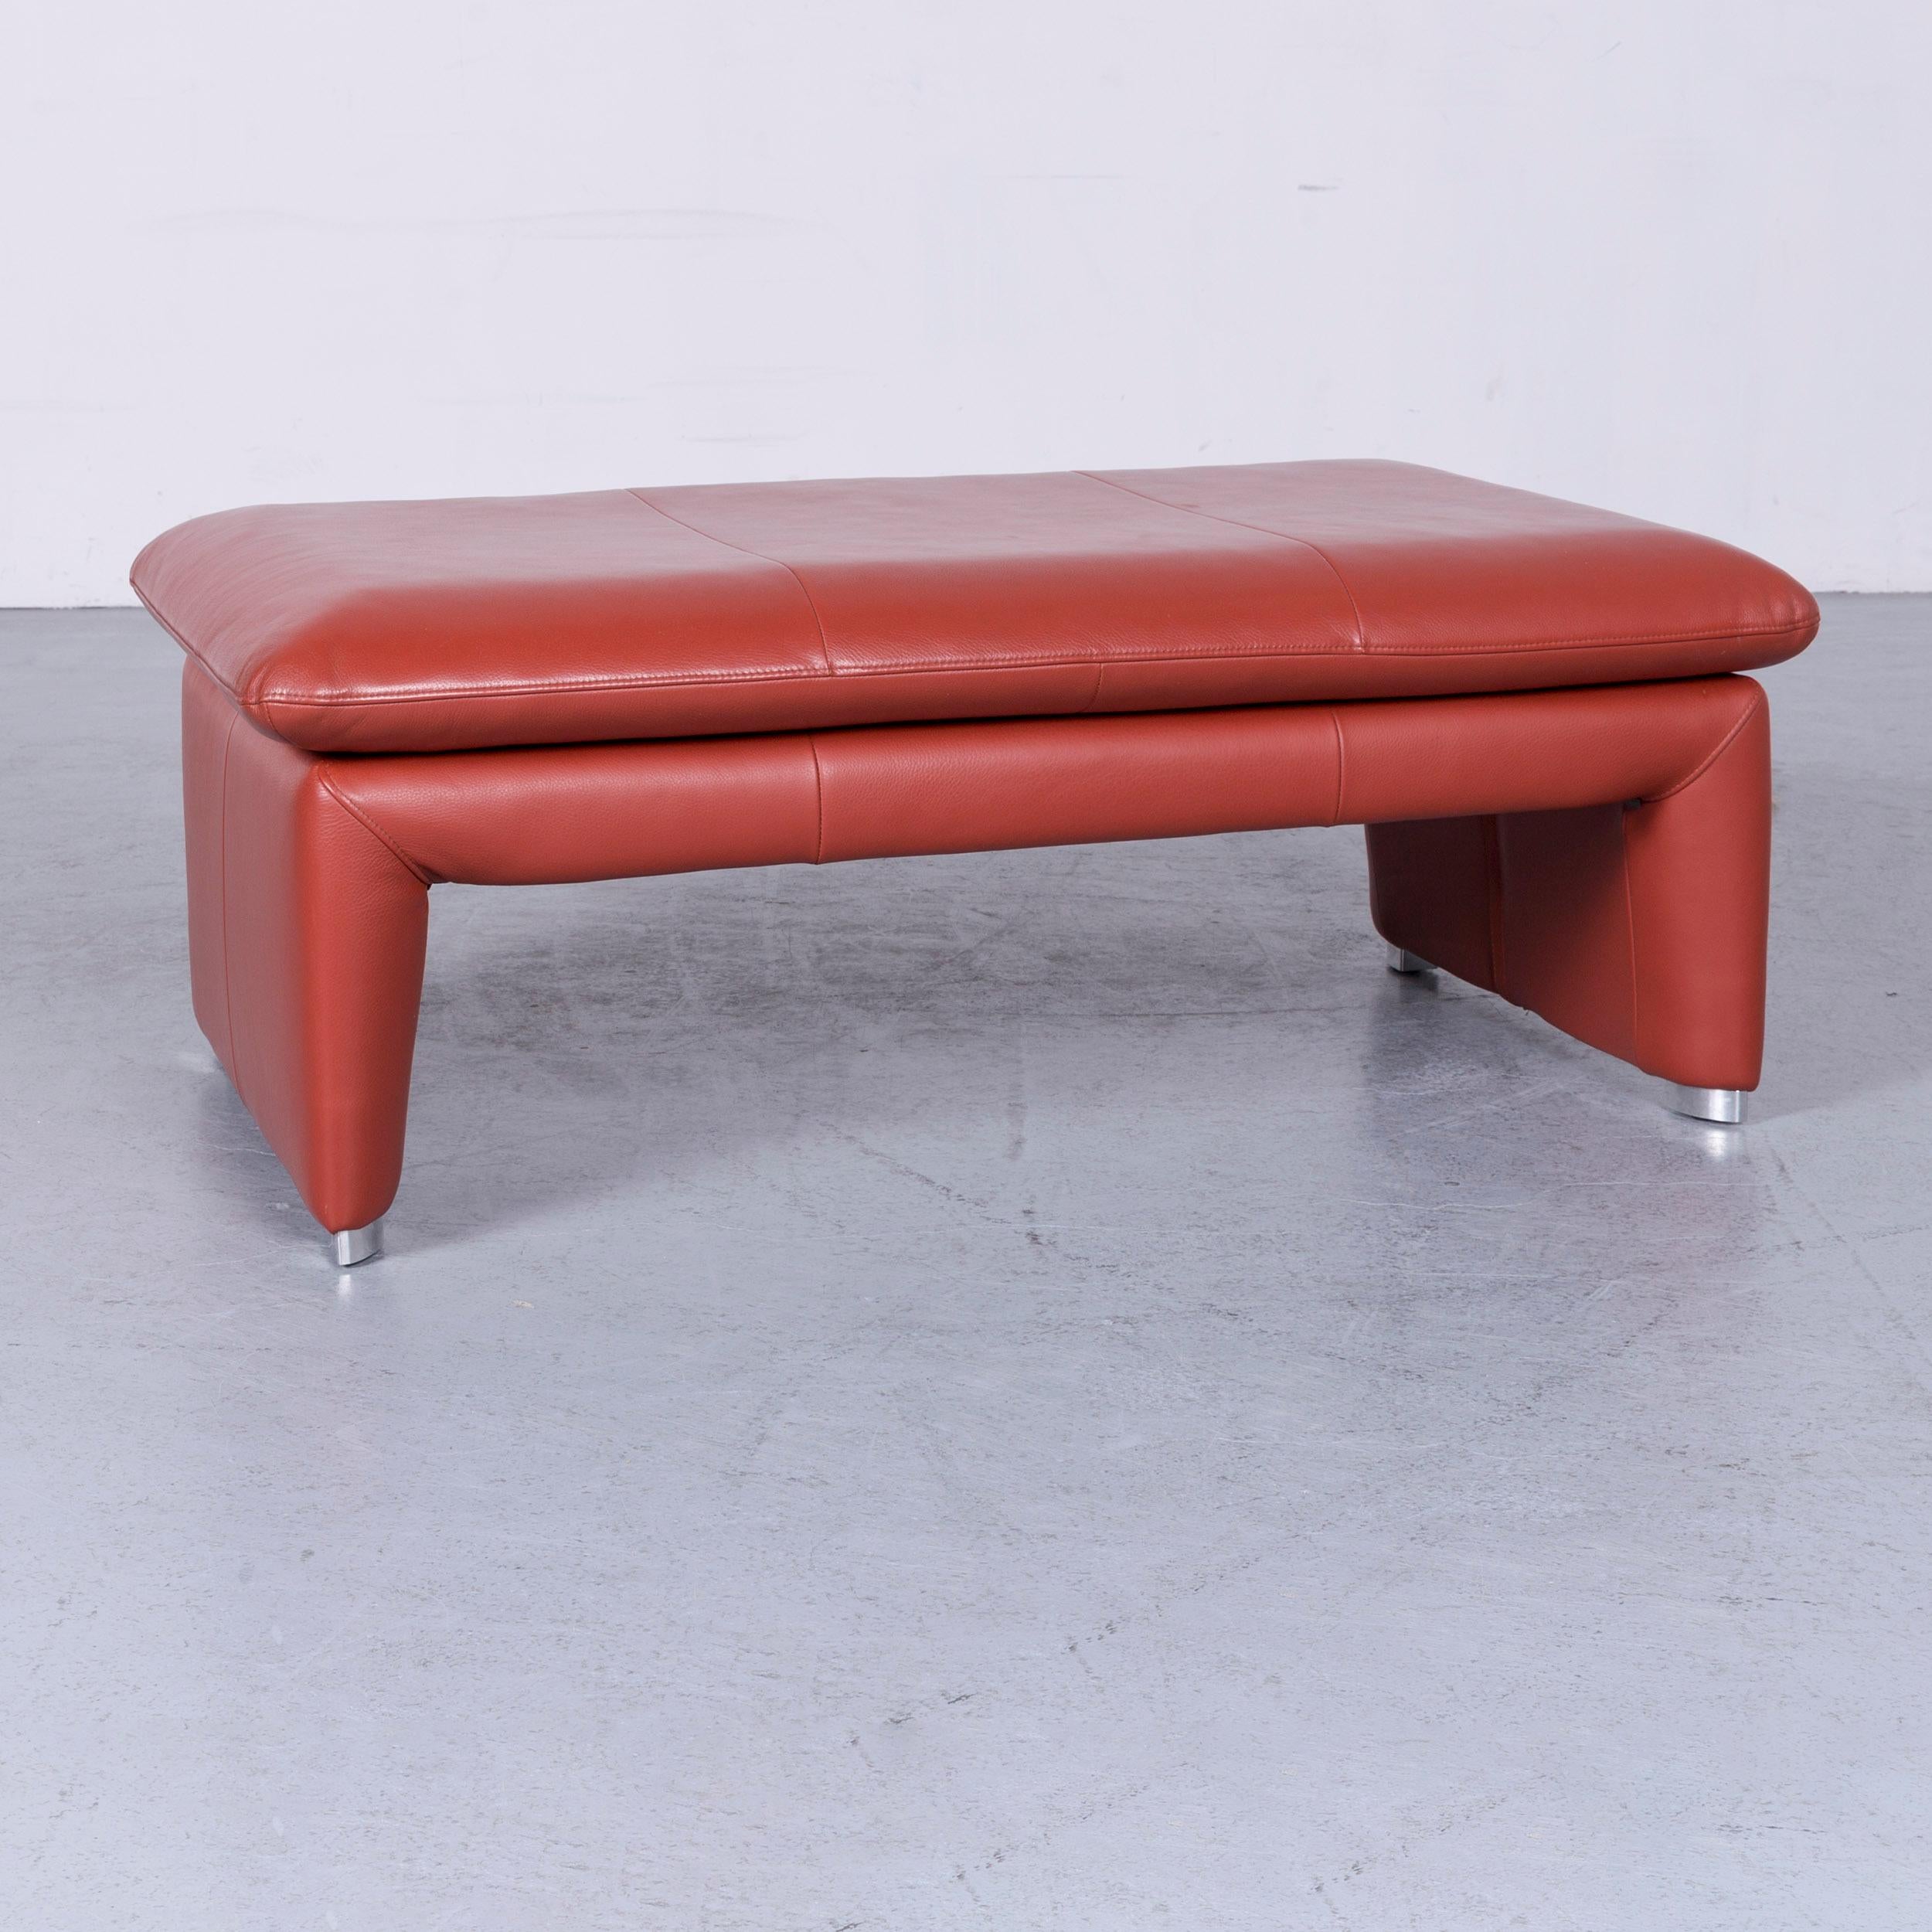 Laauser Corvus Designer Sofa Corner-Sofa Footstool Set Leather Red Couch 2